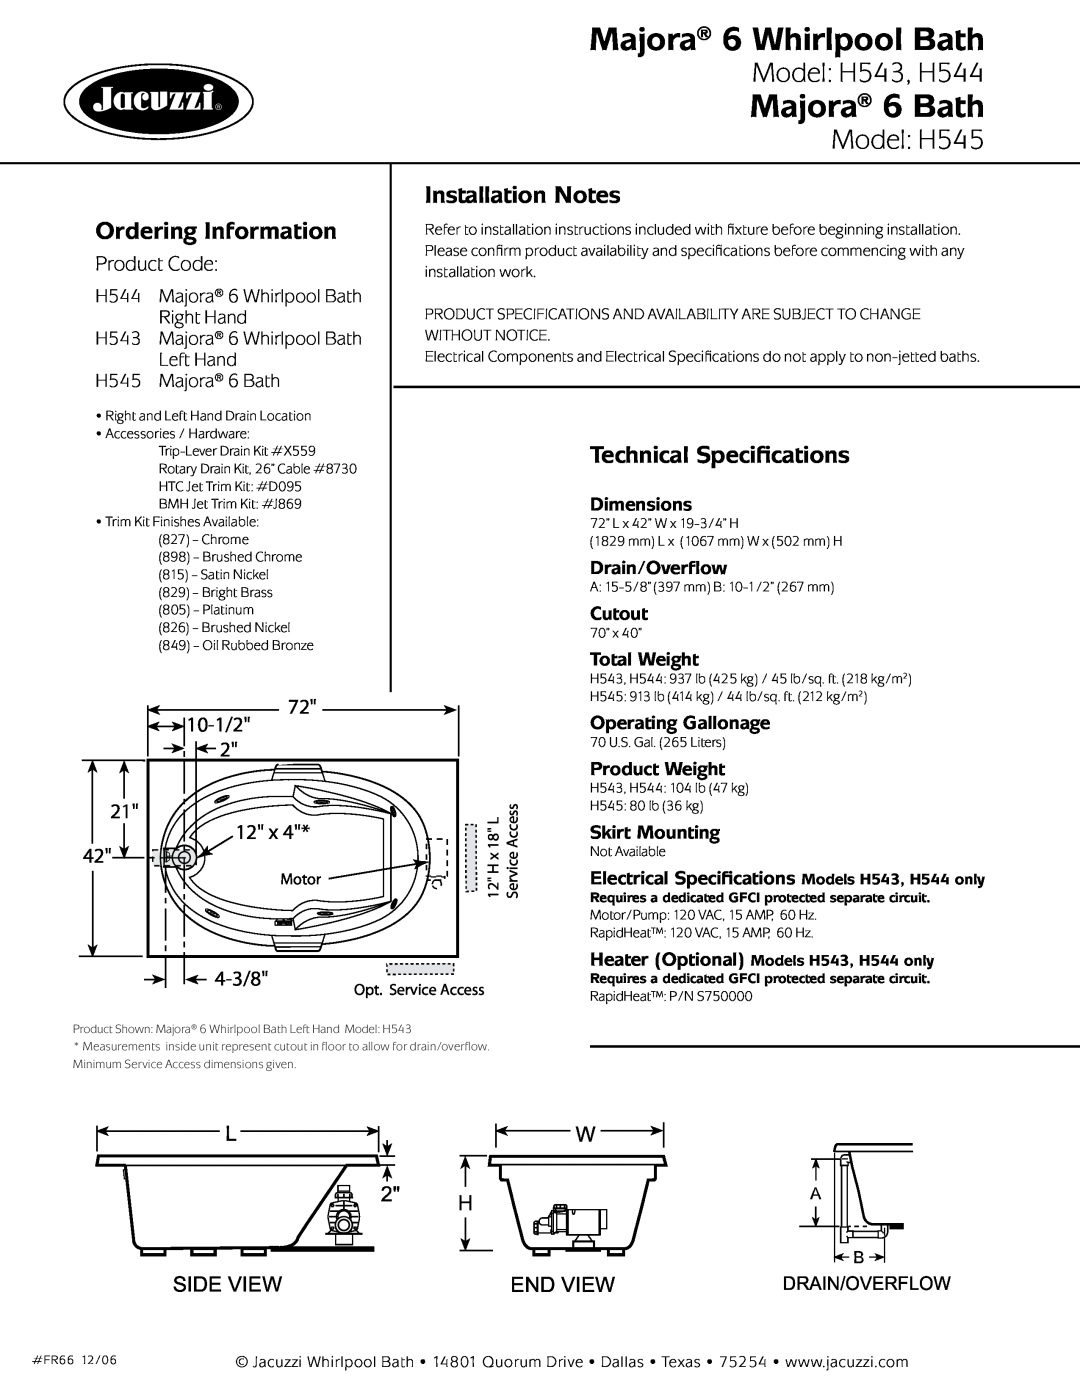 Jacuzzi FR66 dimensions Majora 6 Whirlpool Bath, Majora 6 Bath, Model H543, H544, Model H545, Installation Notes 